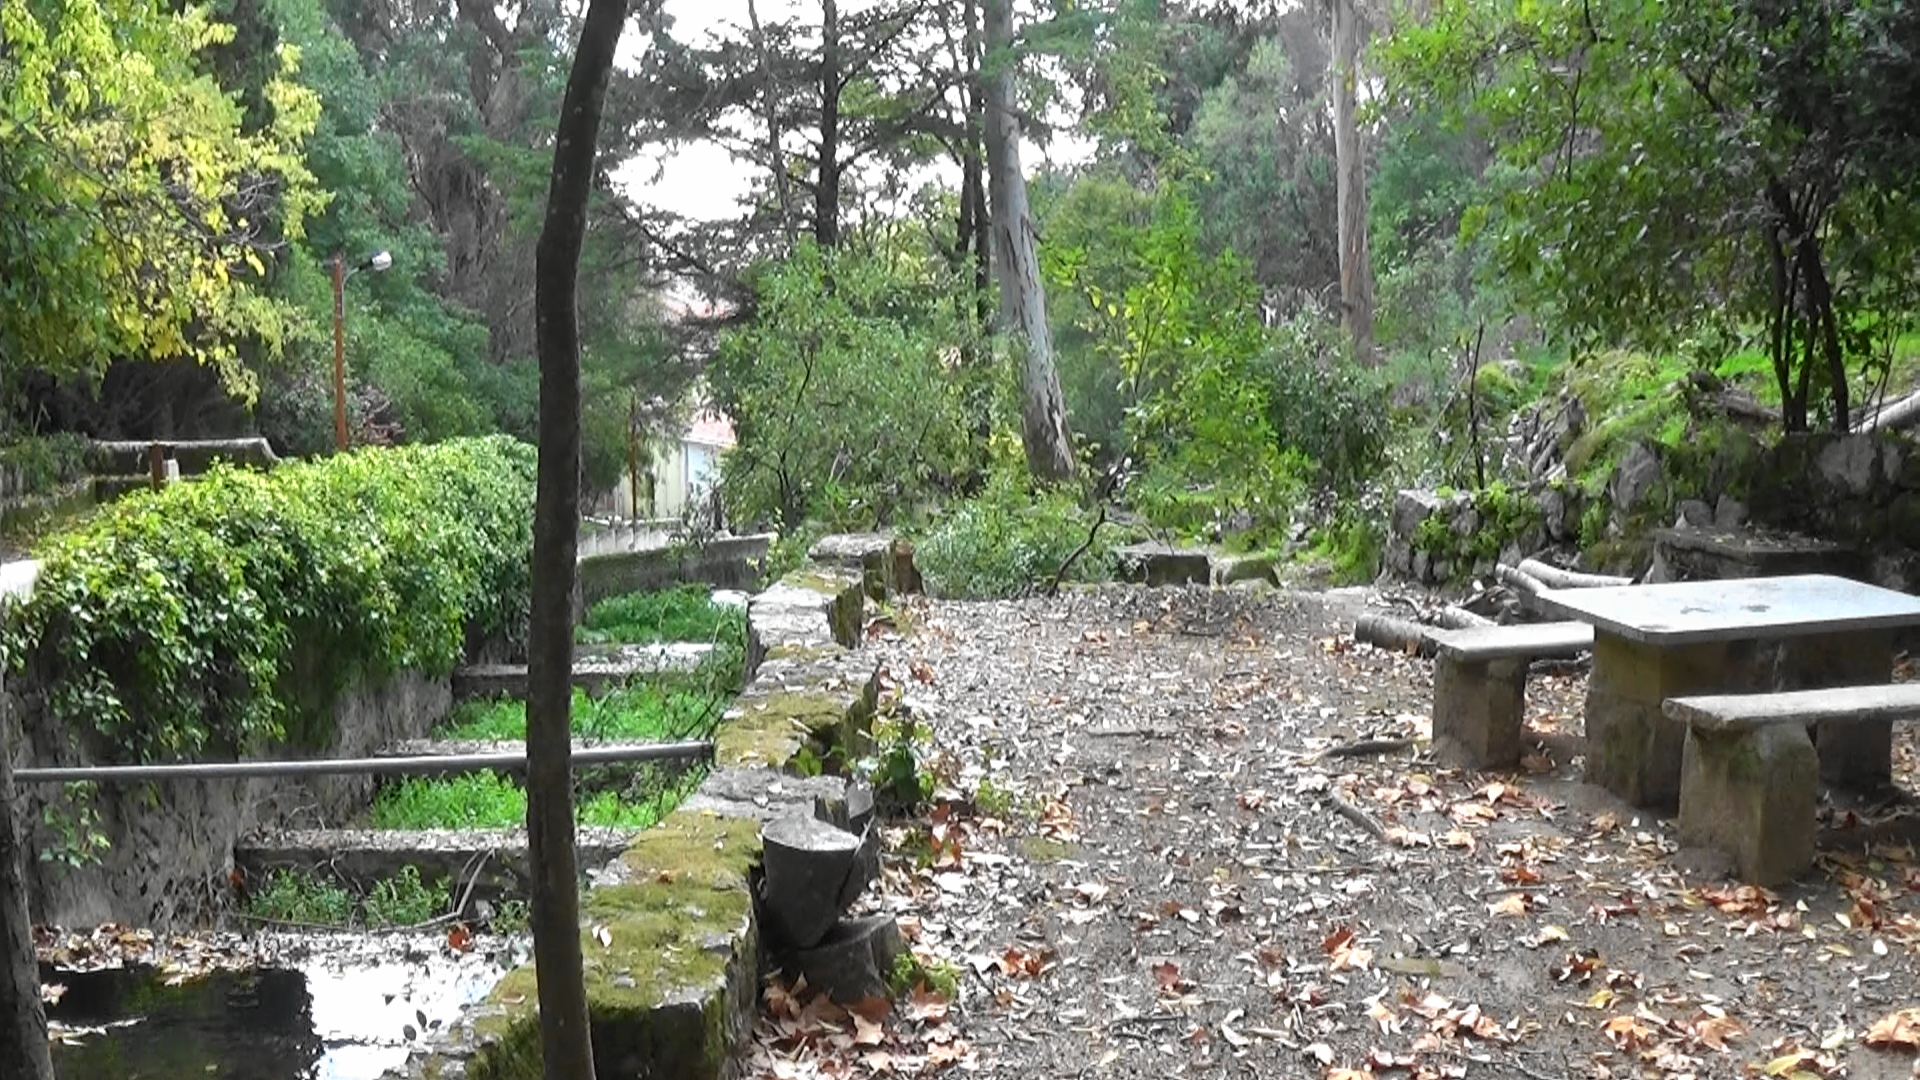 picnic tables made of stone at Cladas de Monchique